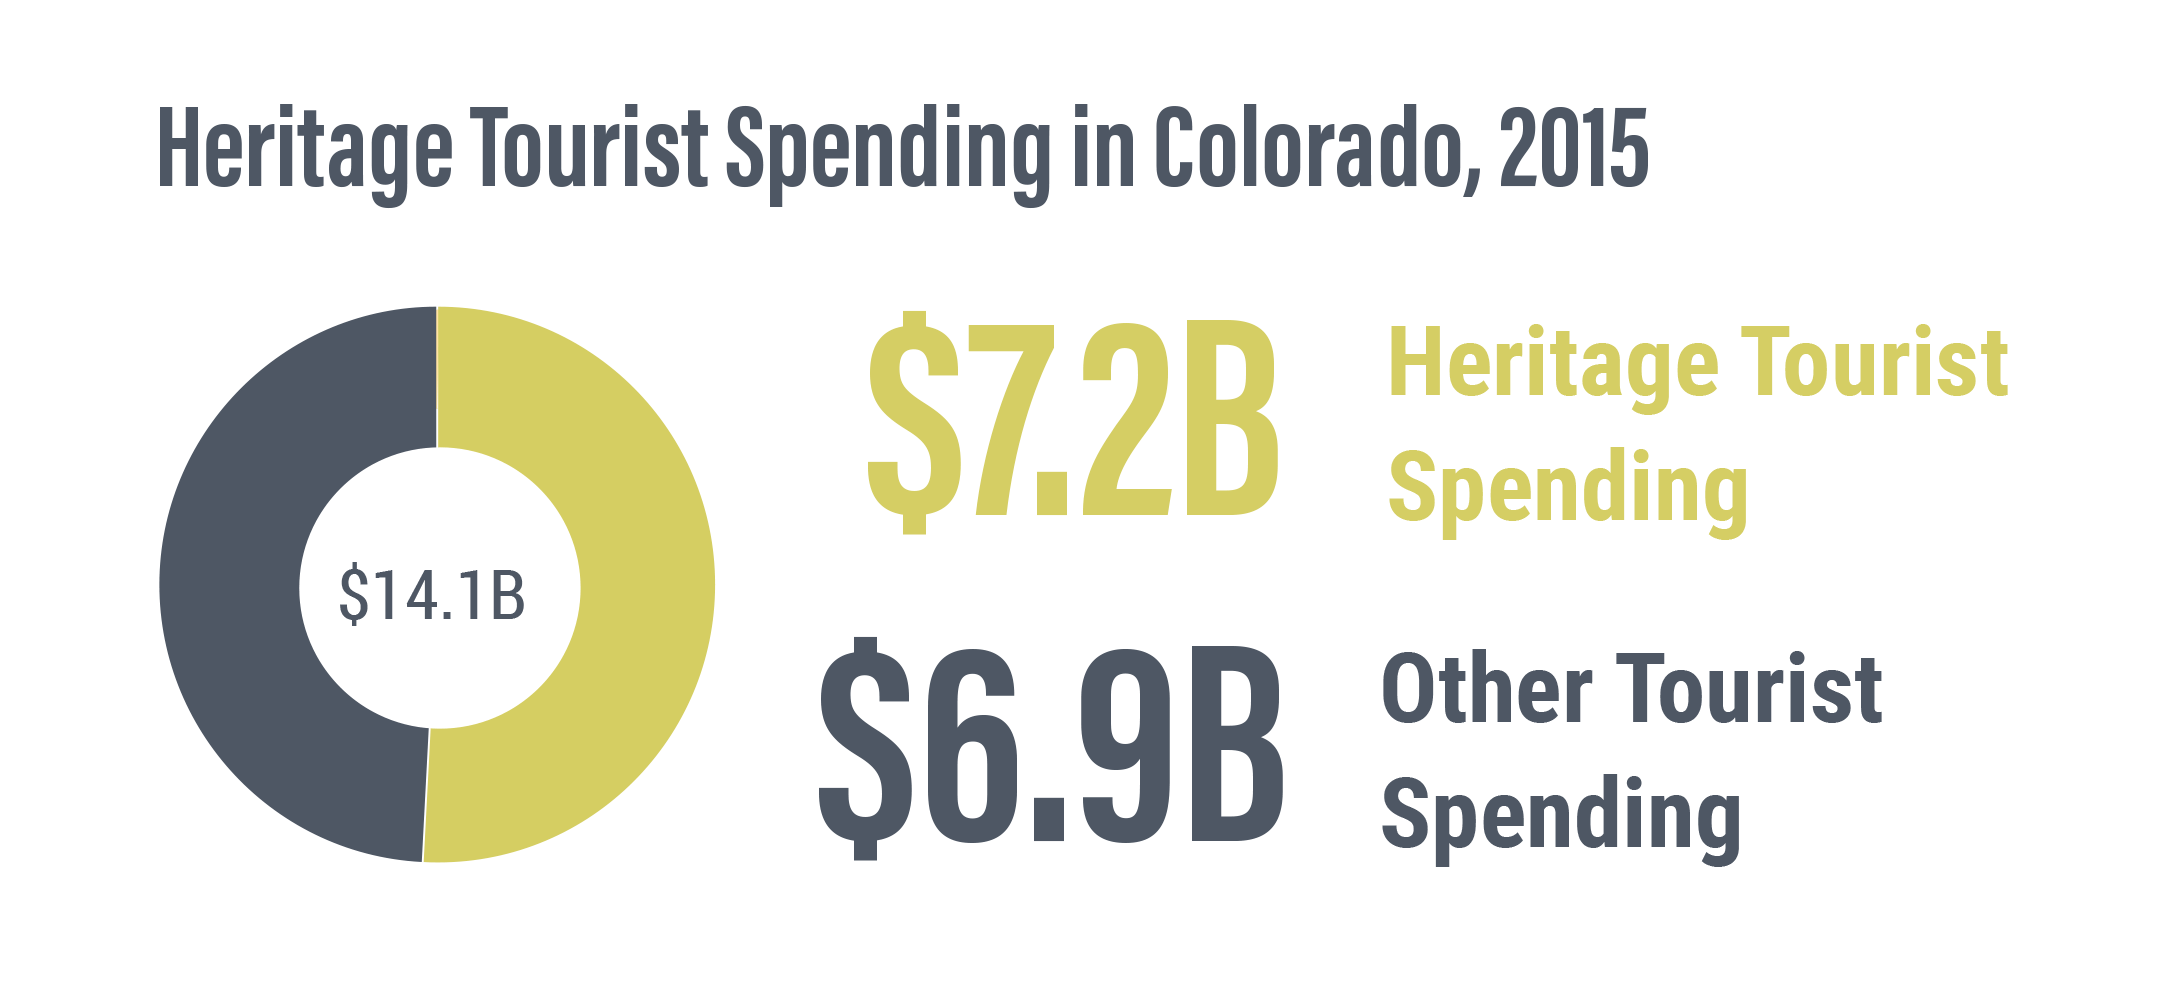 Heritage Tourist Spending in Colorado, 2015